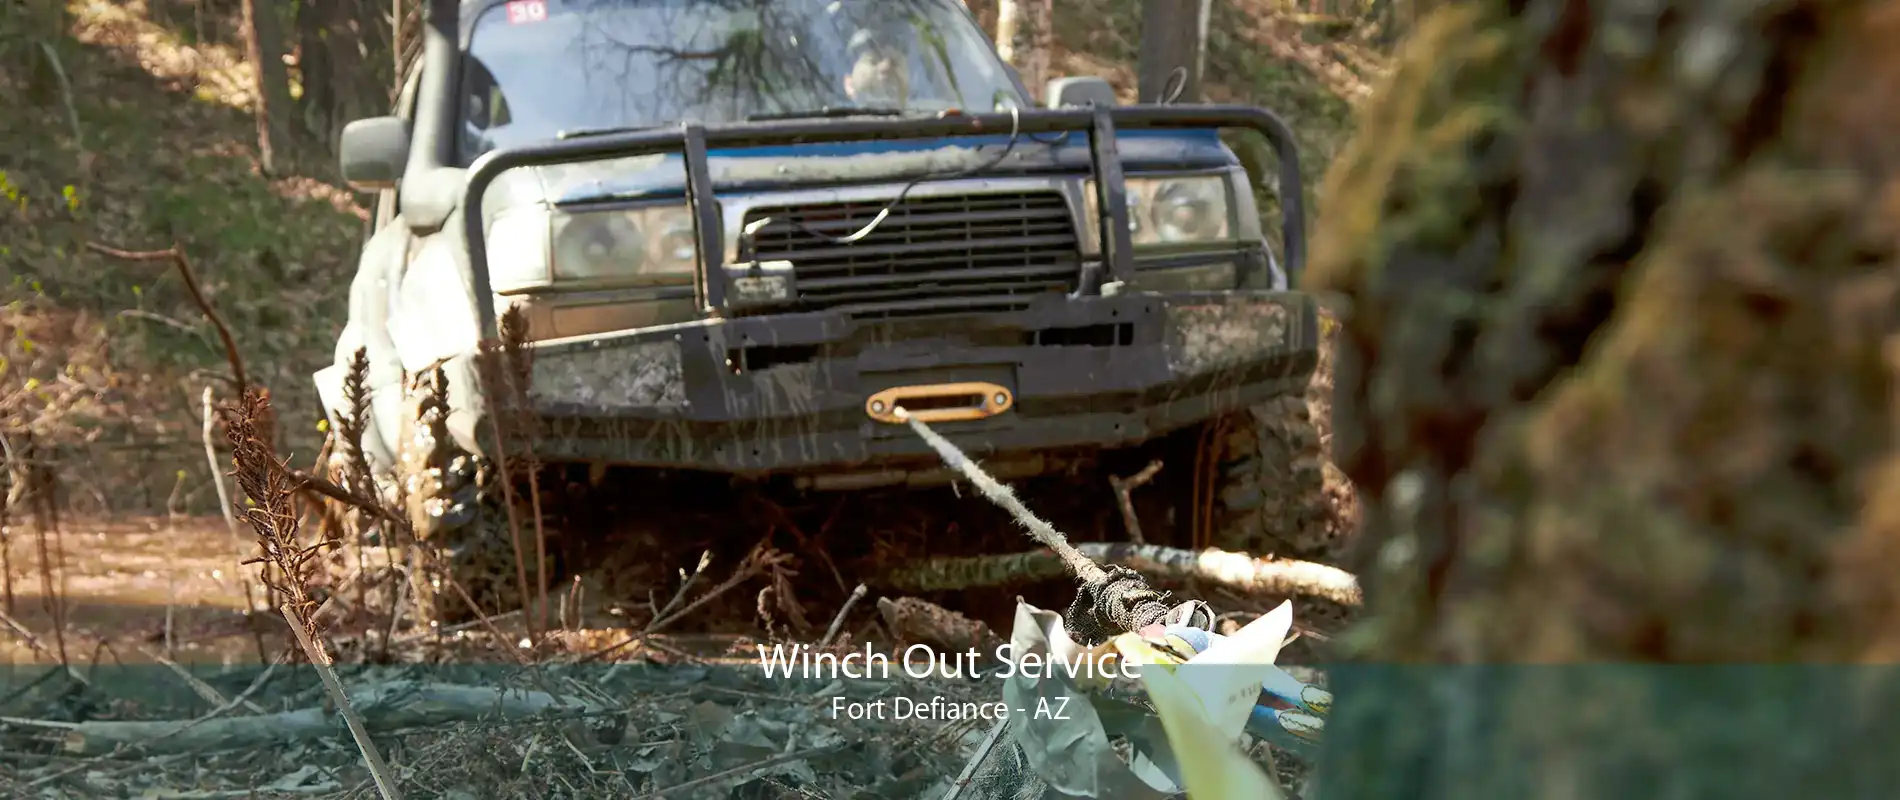 Winch Out Service Fort Defiance - AZ